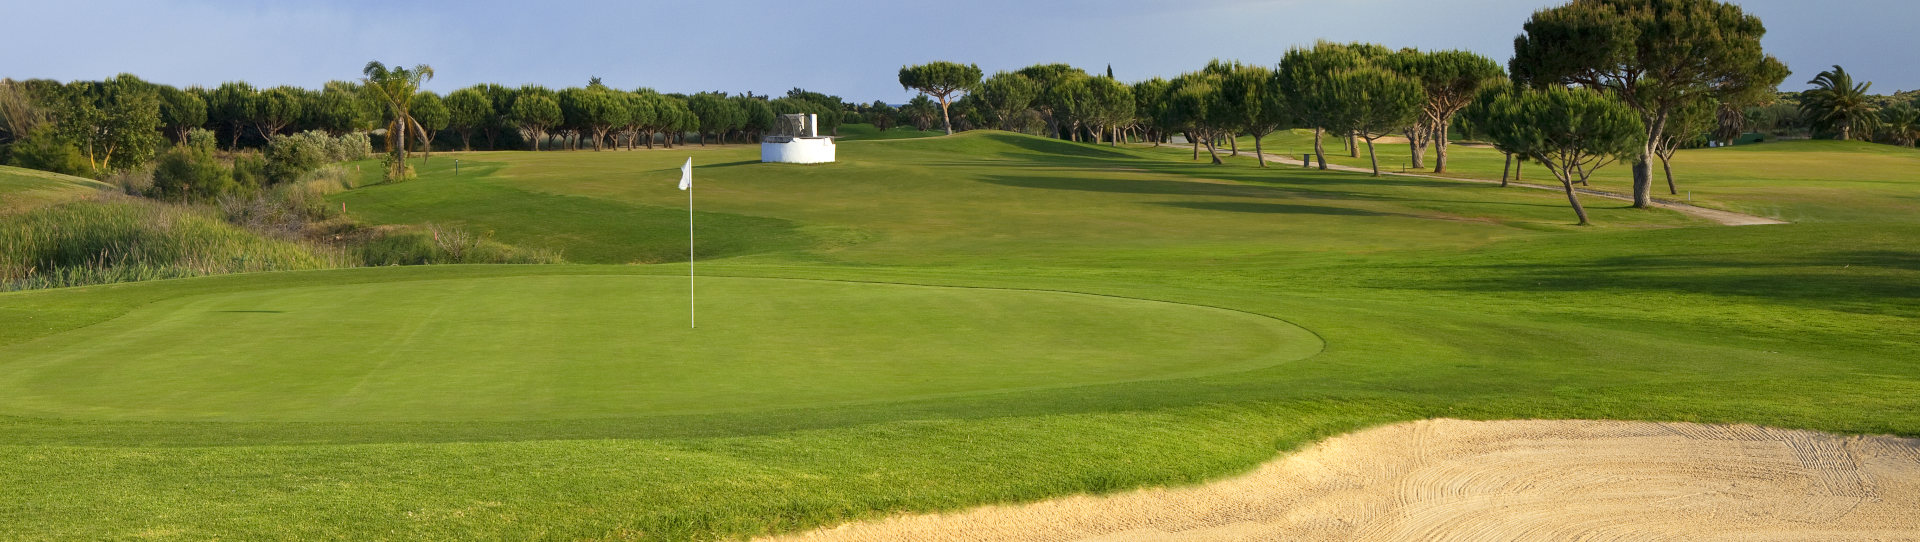 Portugal golf courses - Vilamoura Laguna golf course - Photo 2